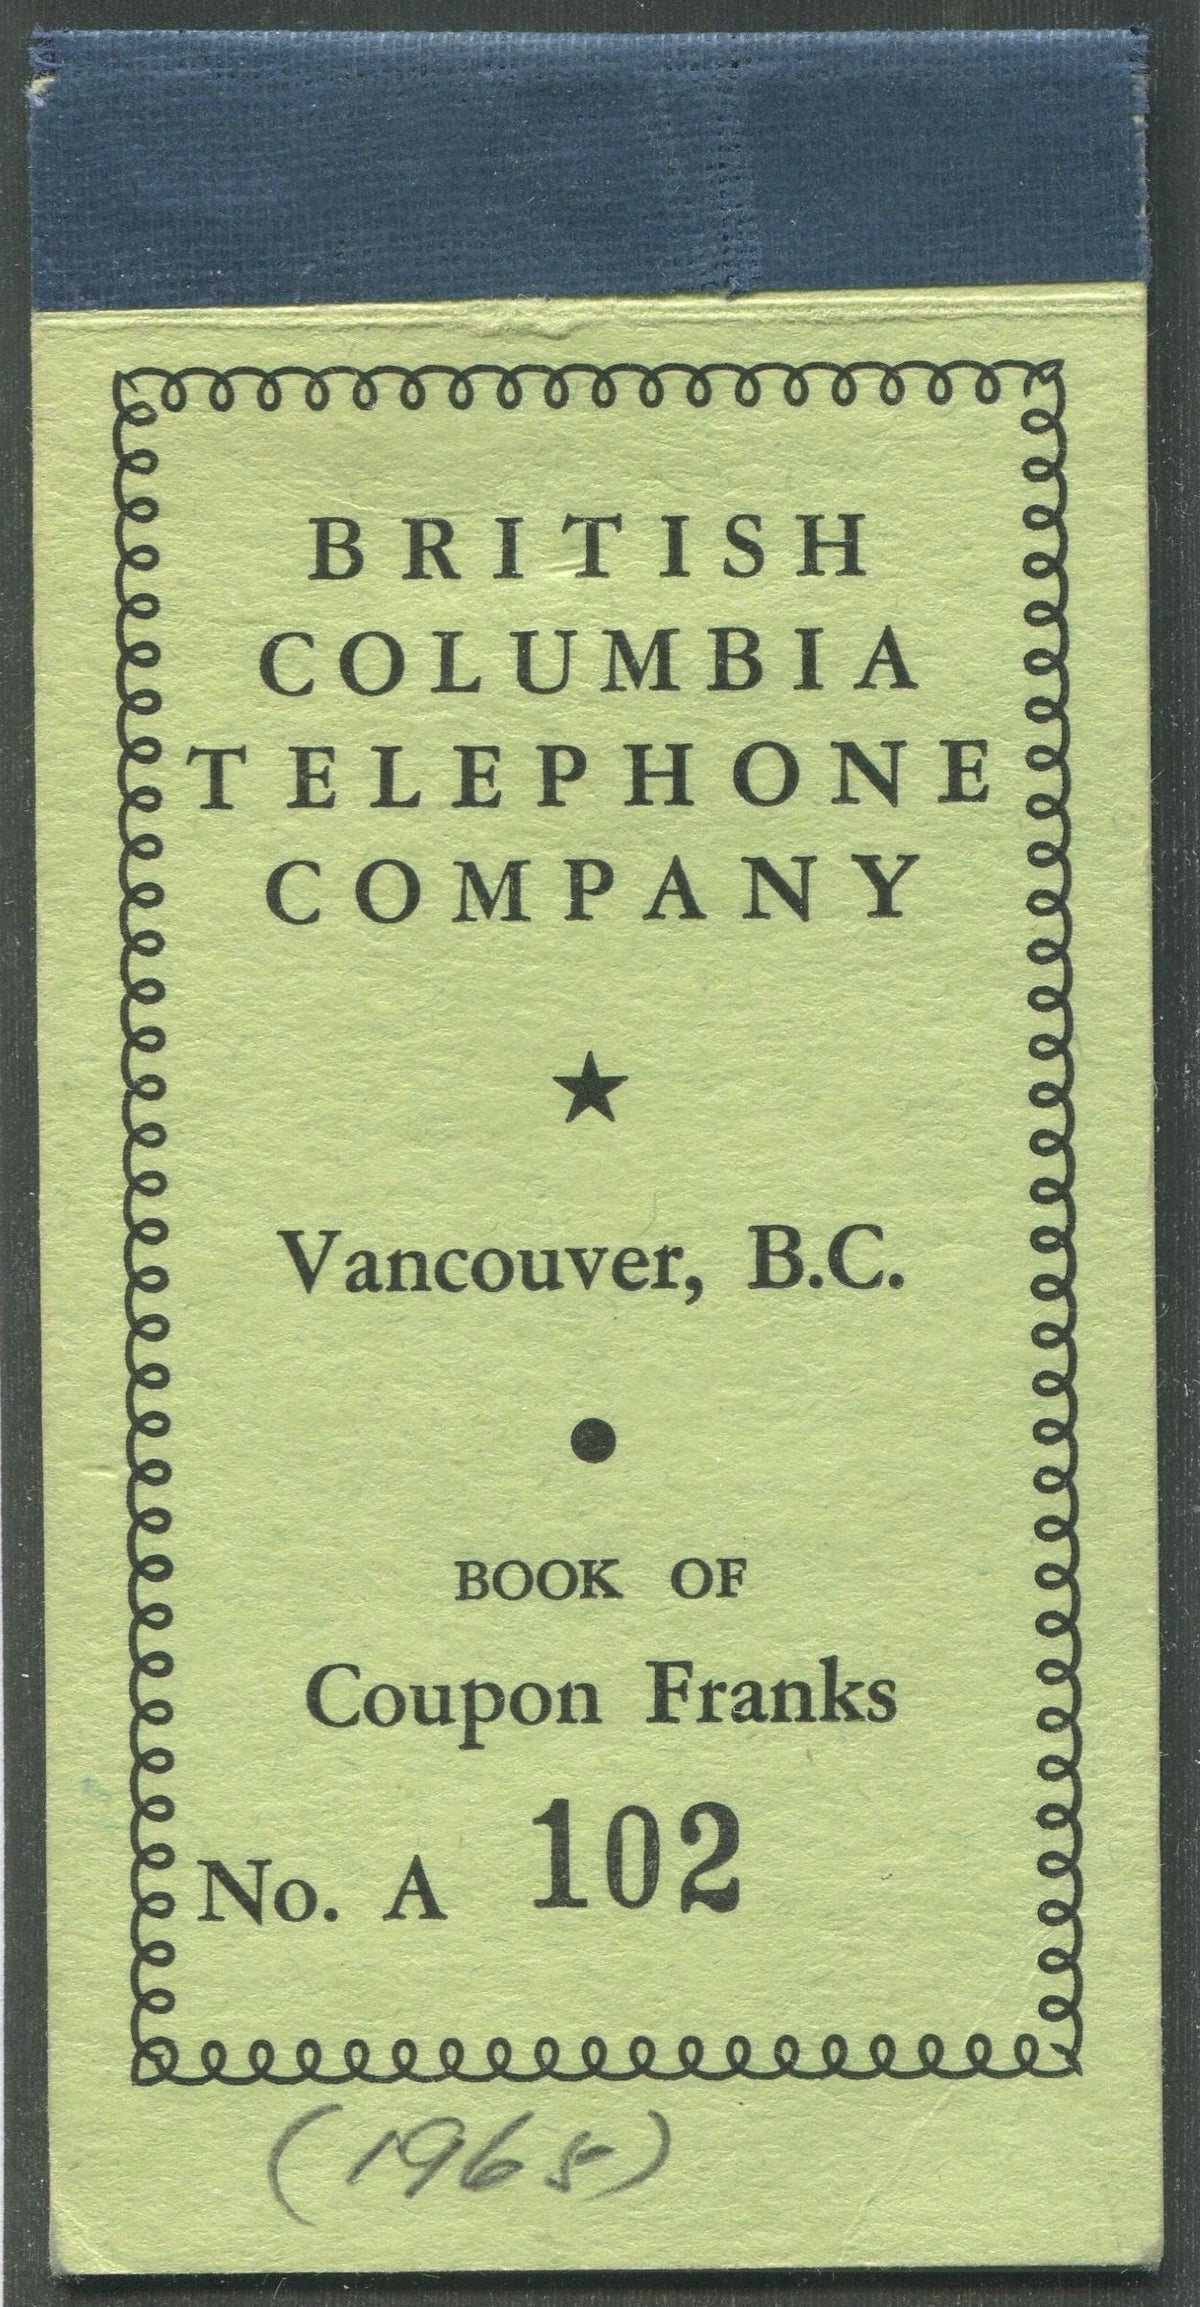 0303BC1708 - BCT205, BCT206, BCT207 - 1965 Booklet